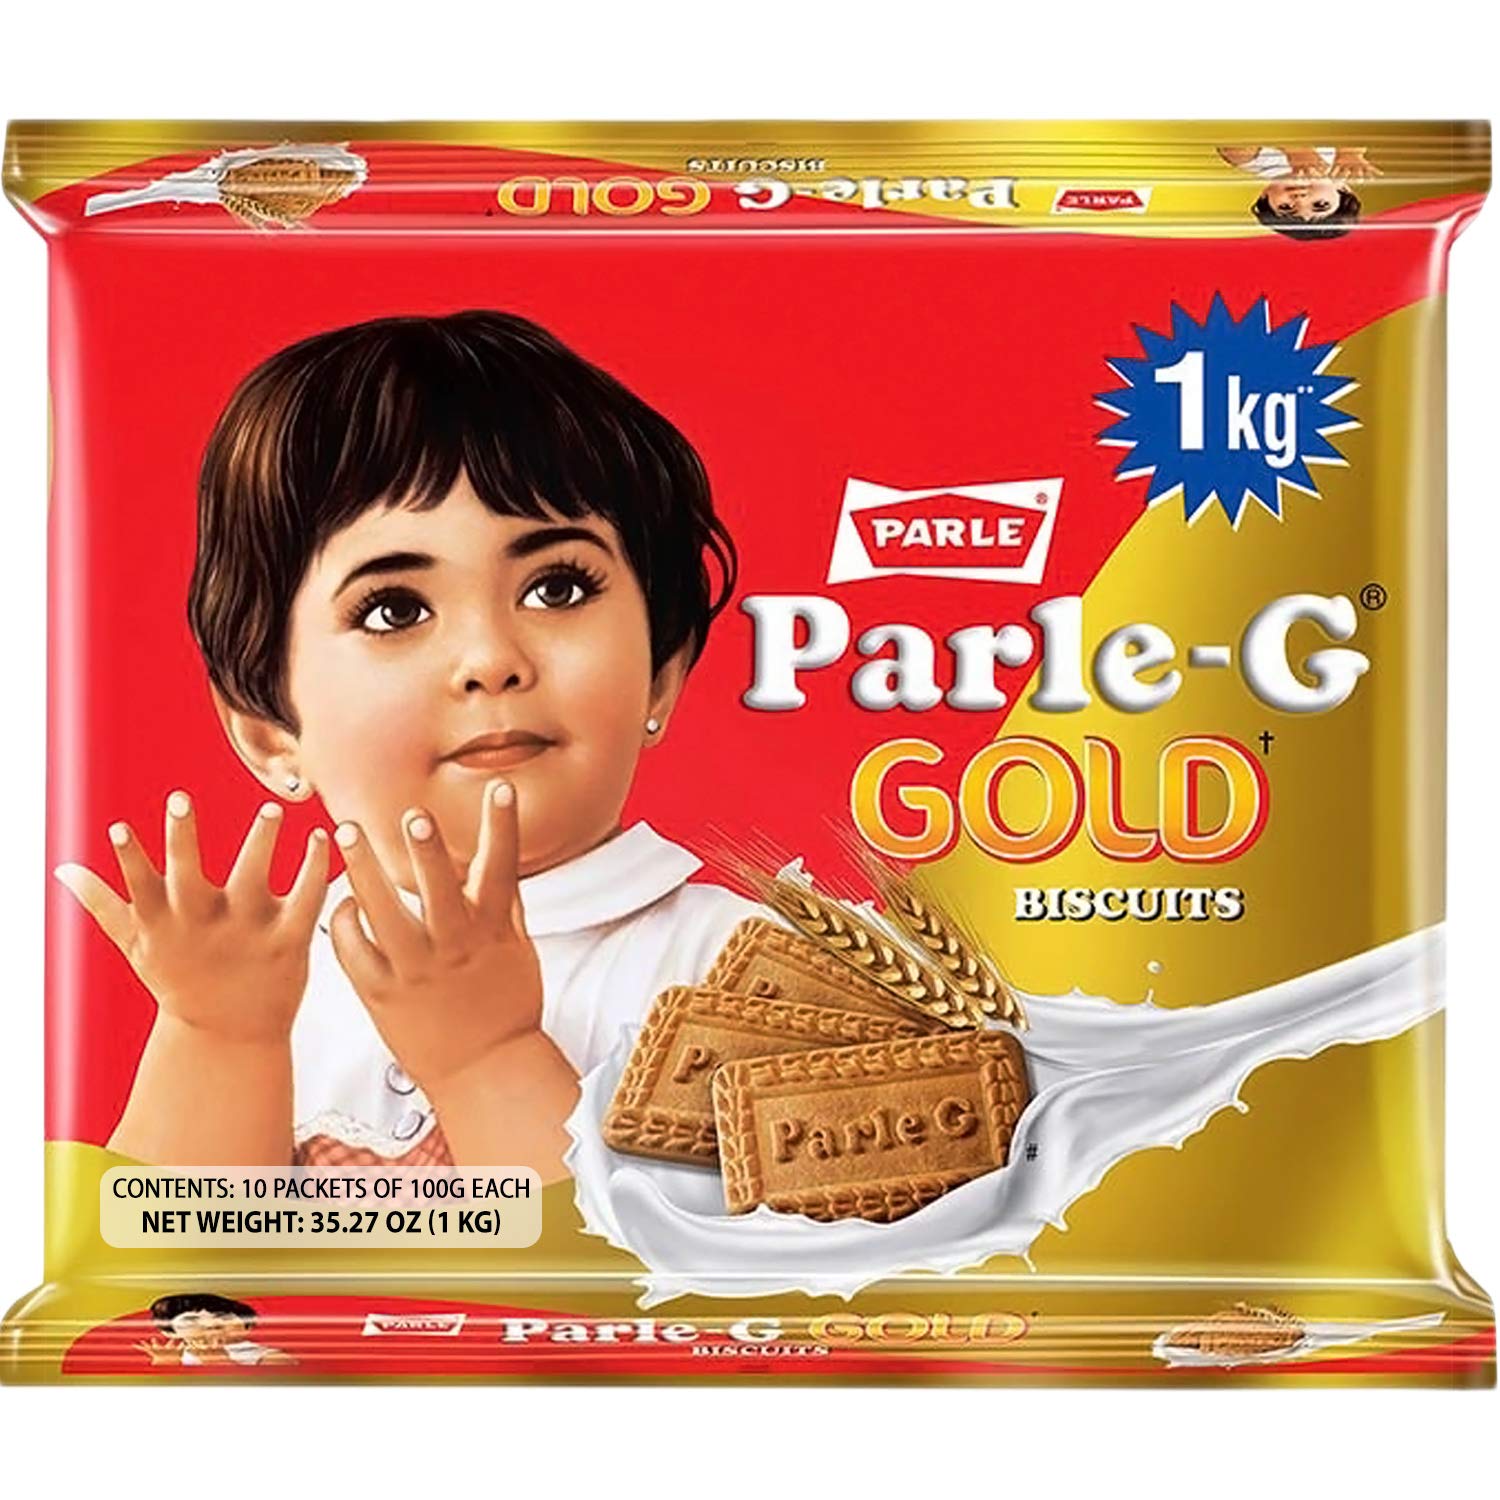 Parle-G Gold Glucose Biscuits 1kg